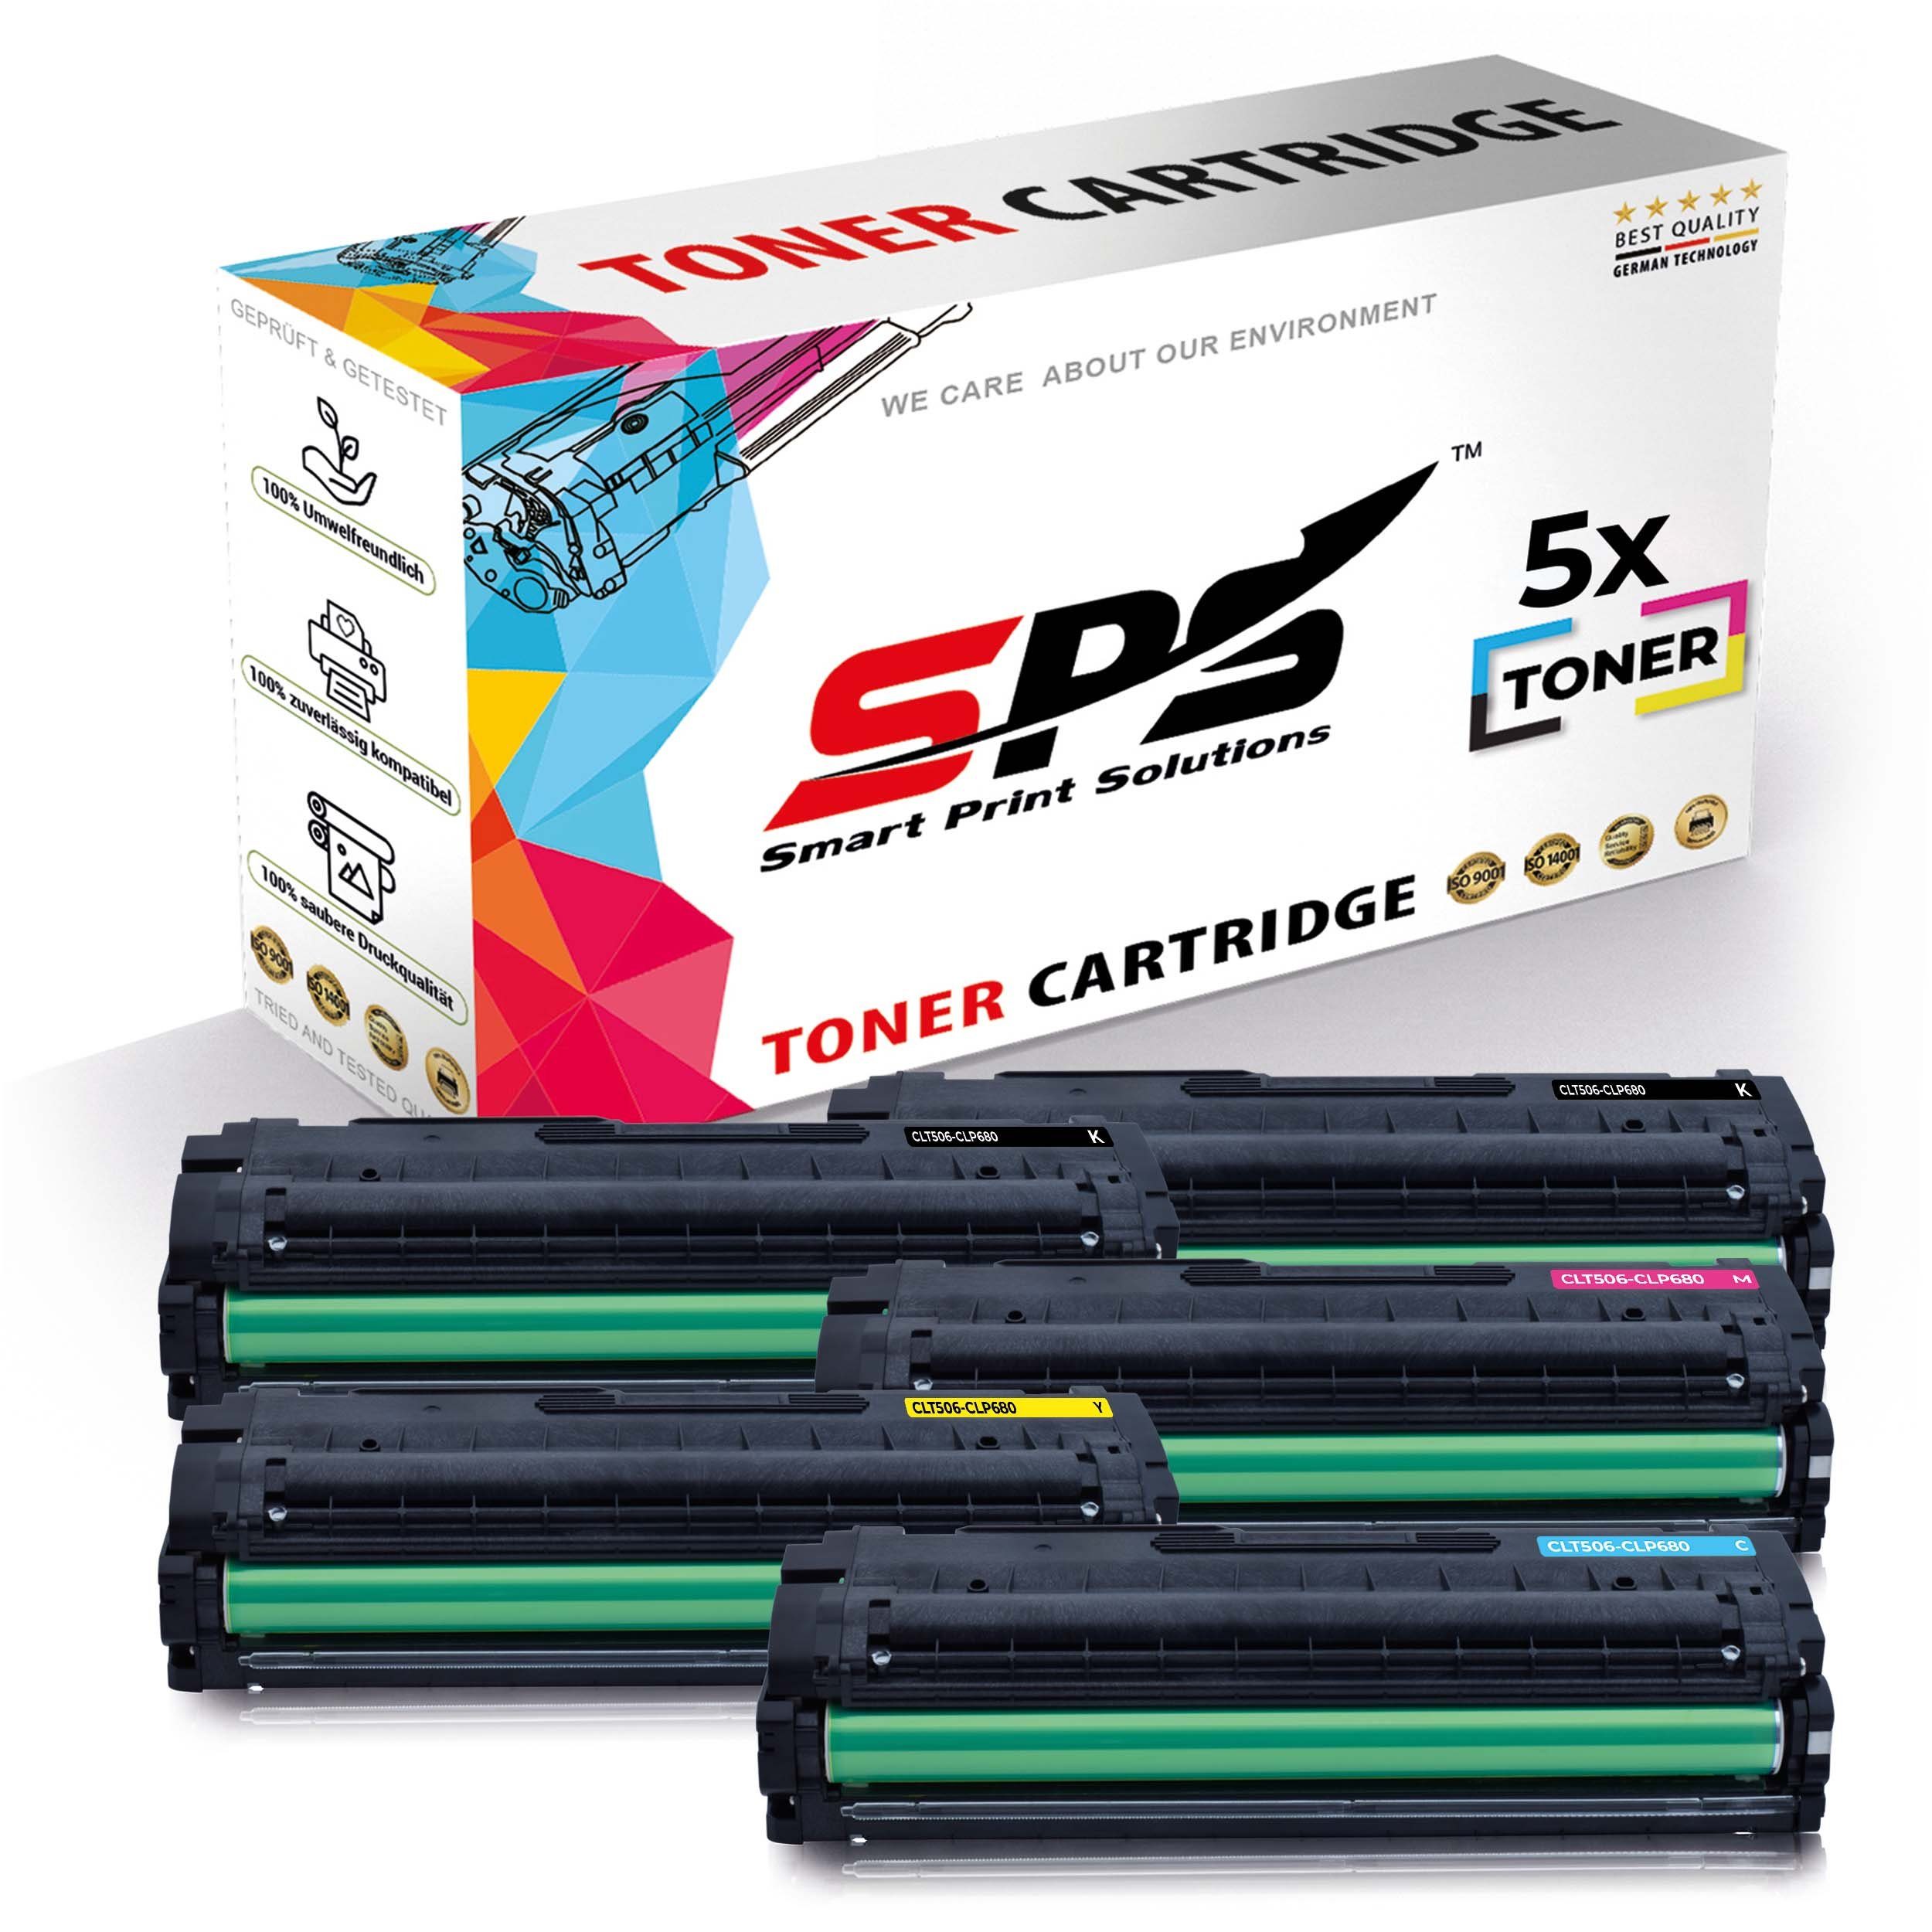 SPS Tonerkartusche 5x Multipack Set Kompatibel für Samsung CLX 6260, (5er Pack, 5x Toner)